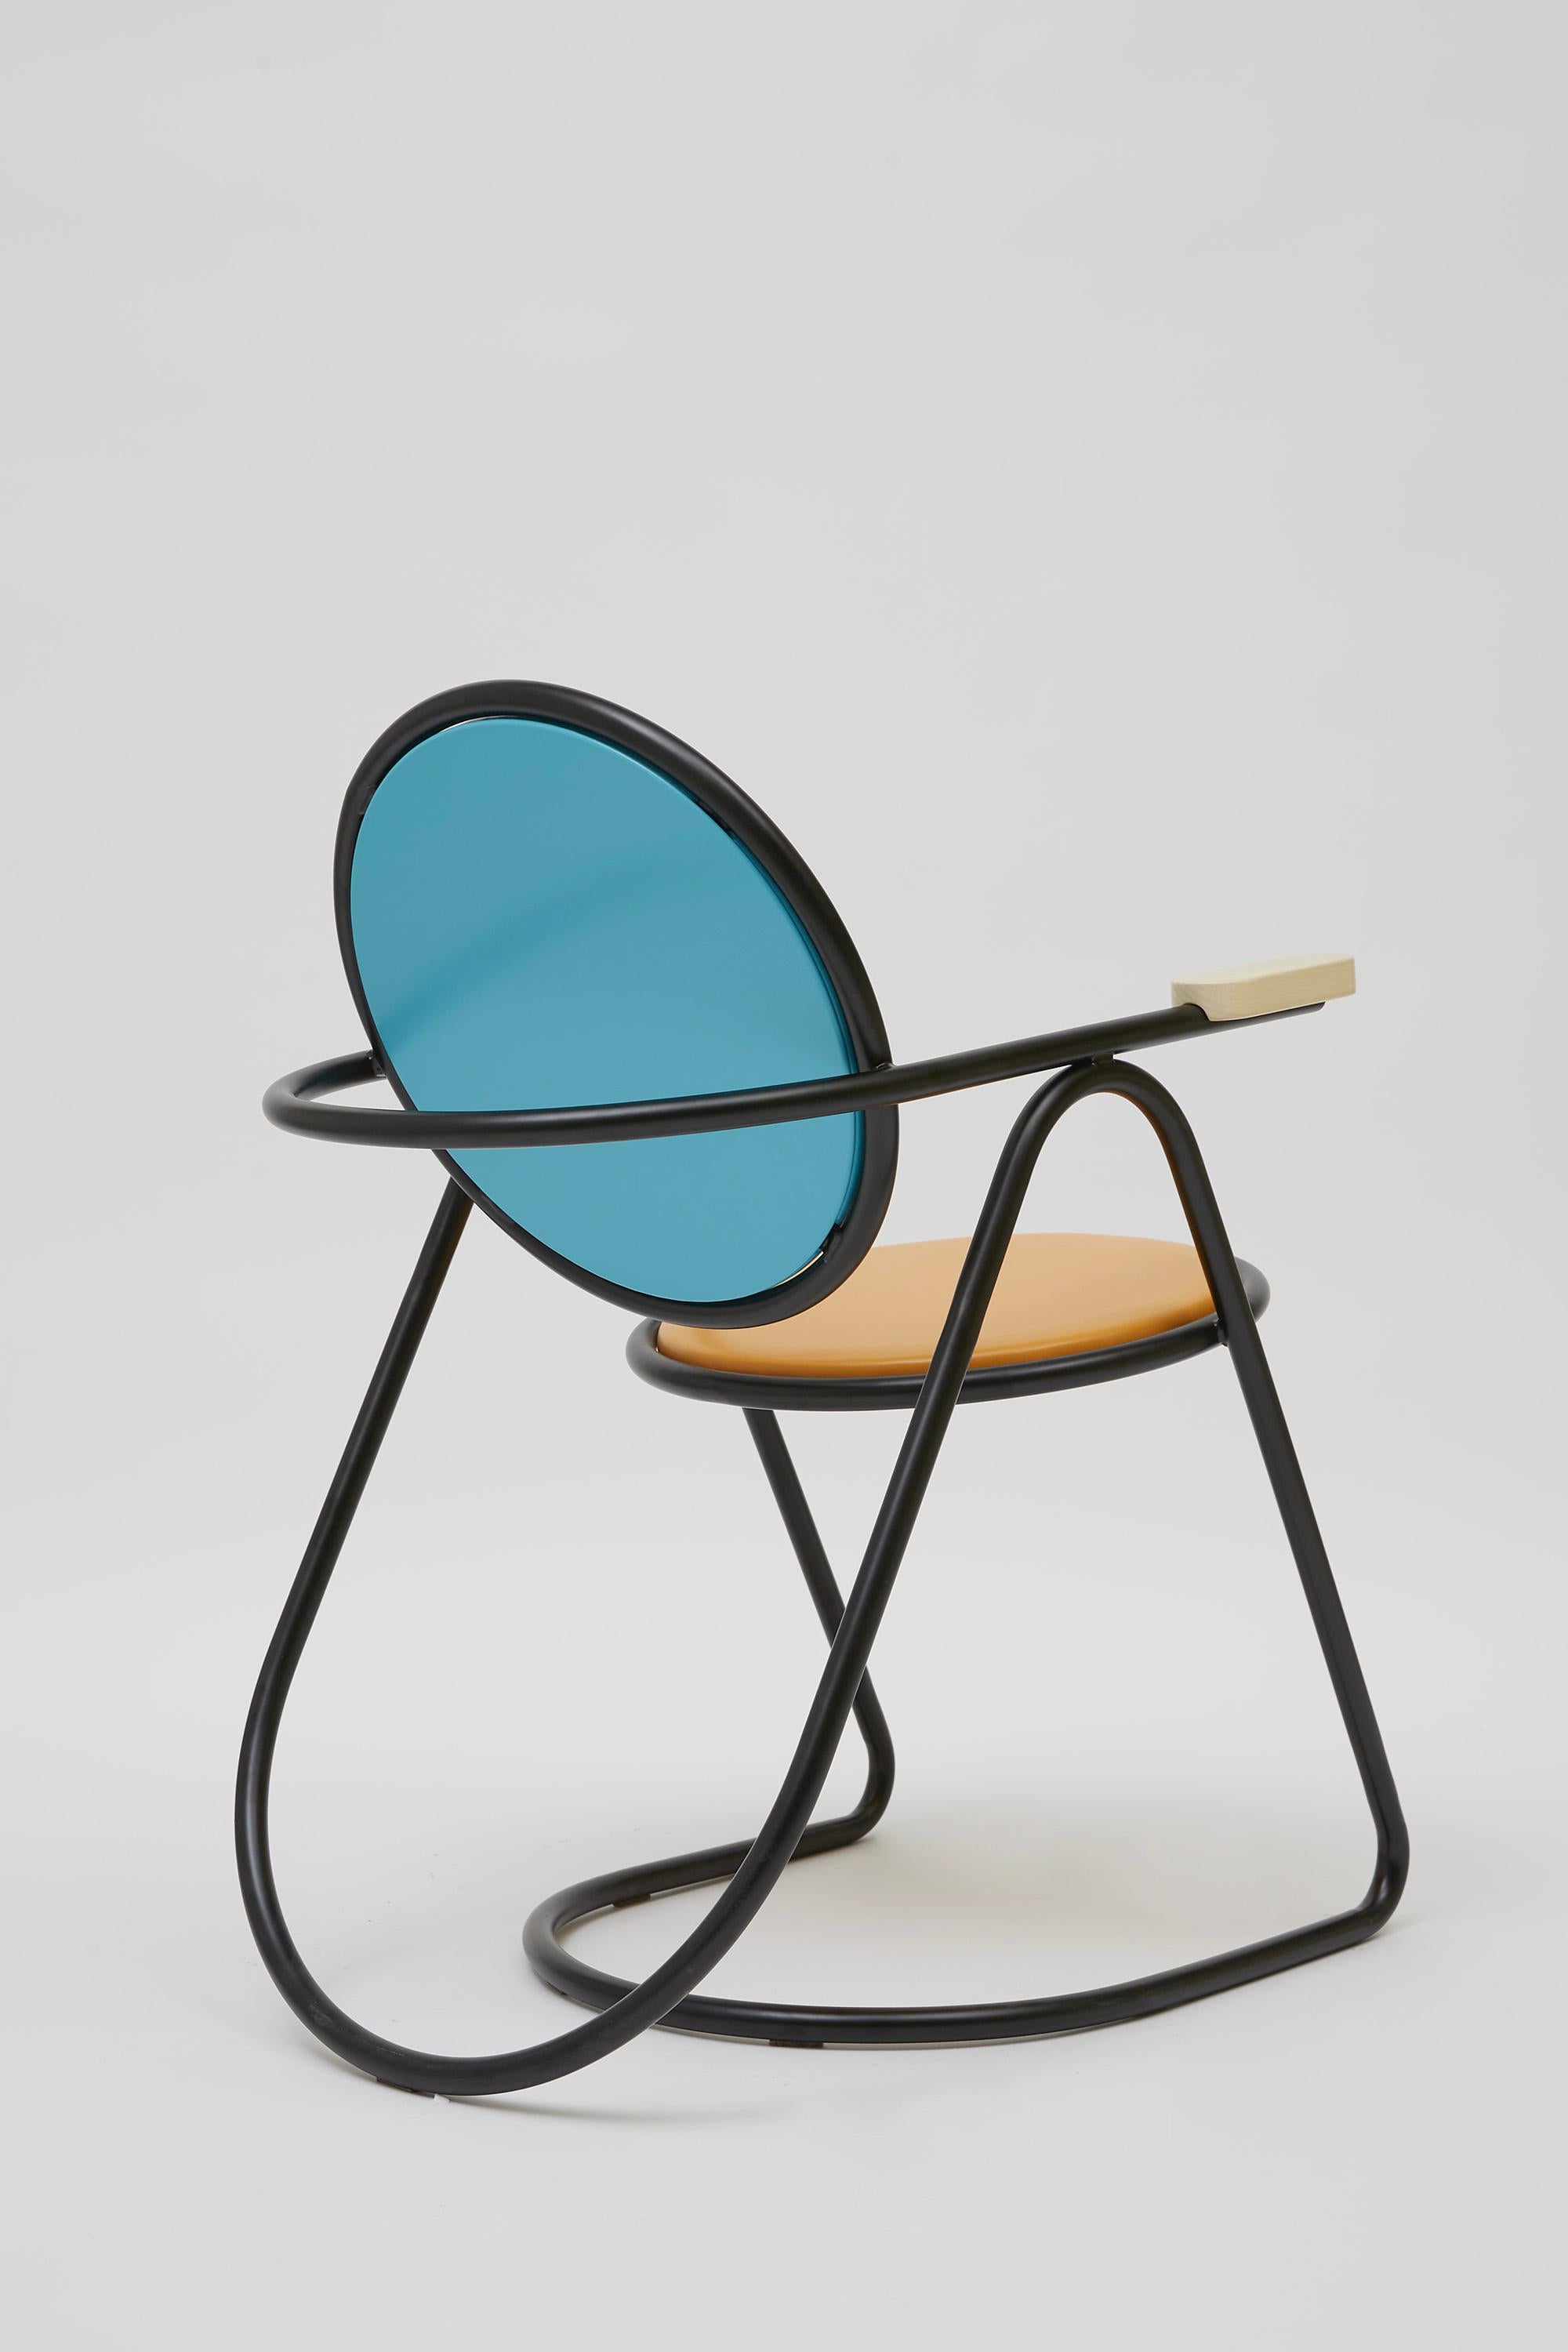 Contemporary U-Disk Easy Chair, Black, Orange & Light Blue For Sale